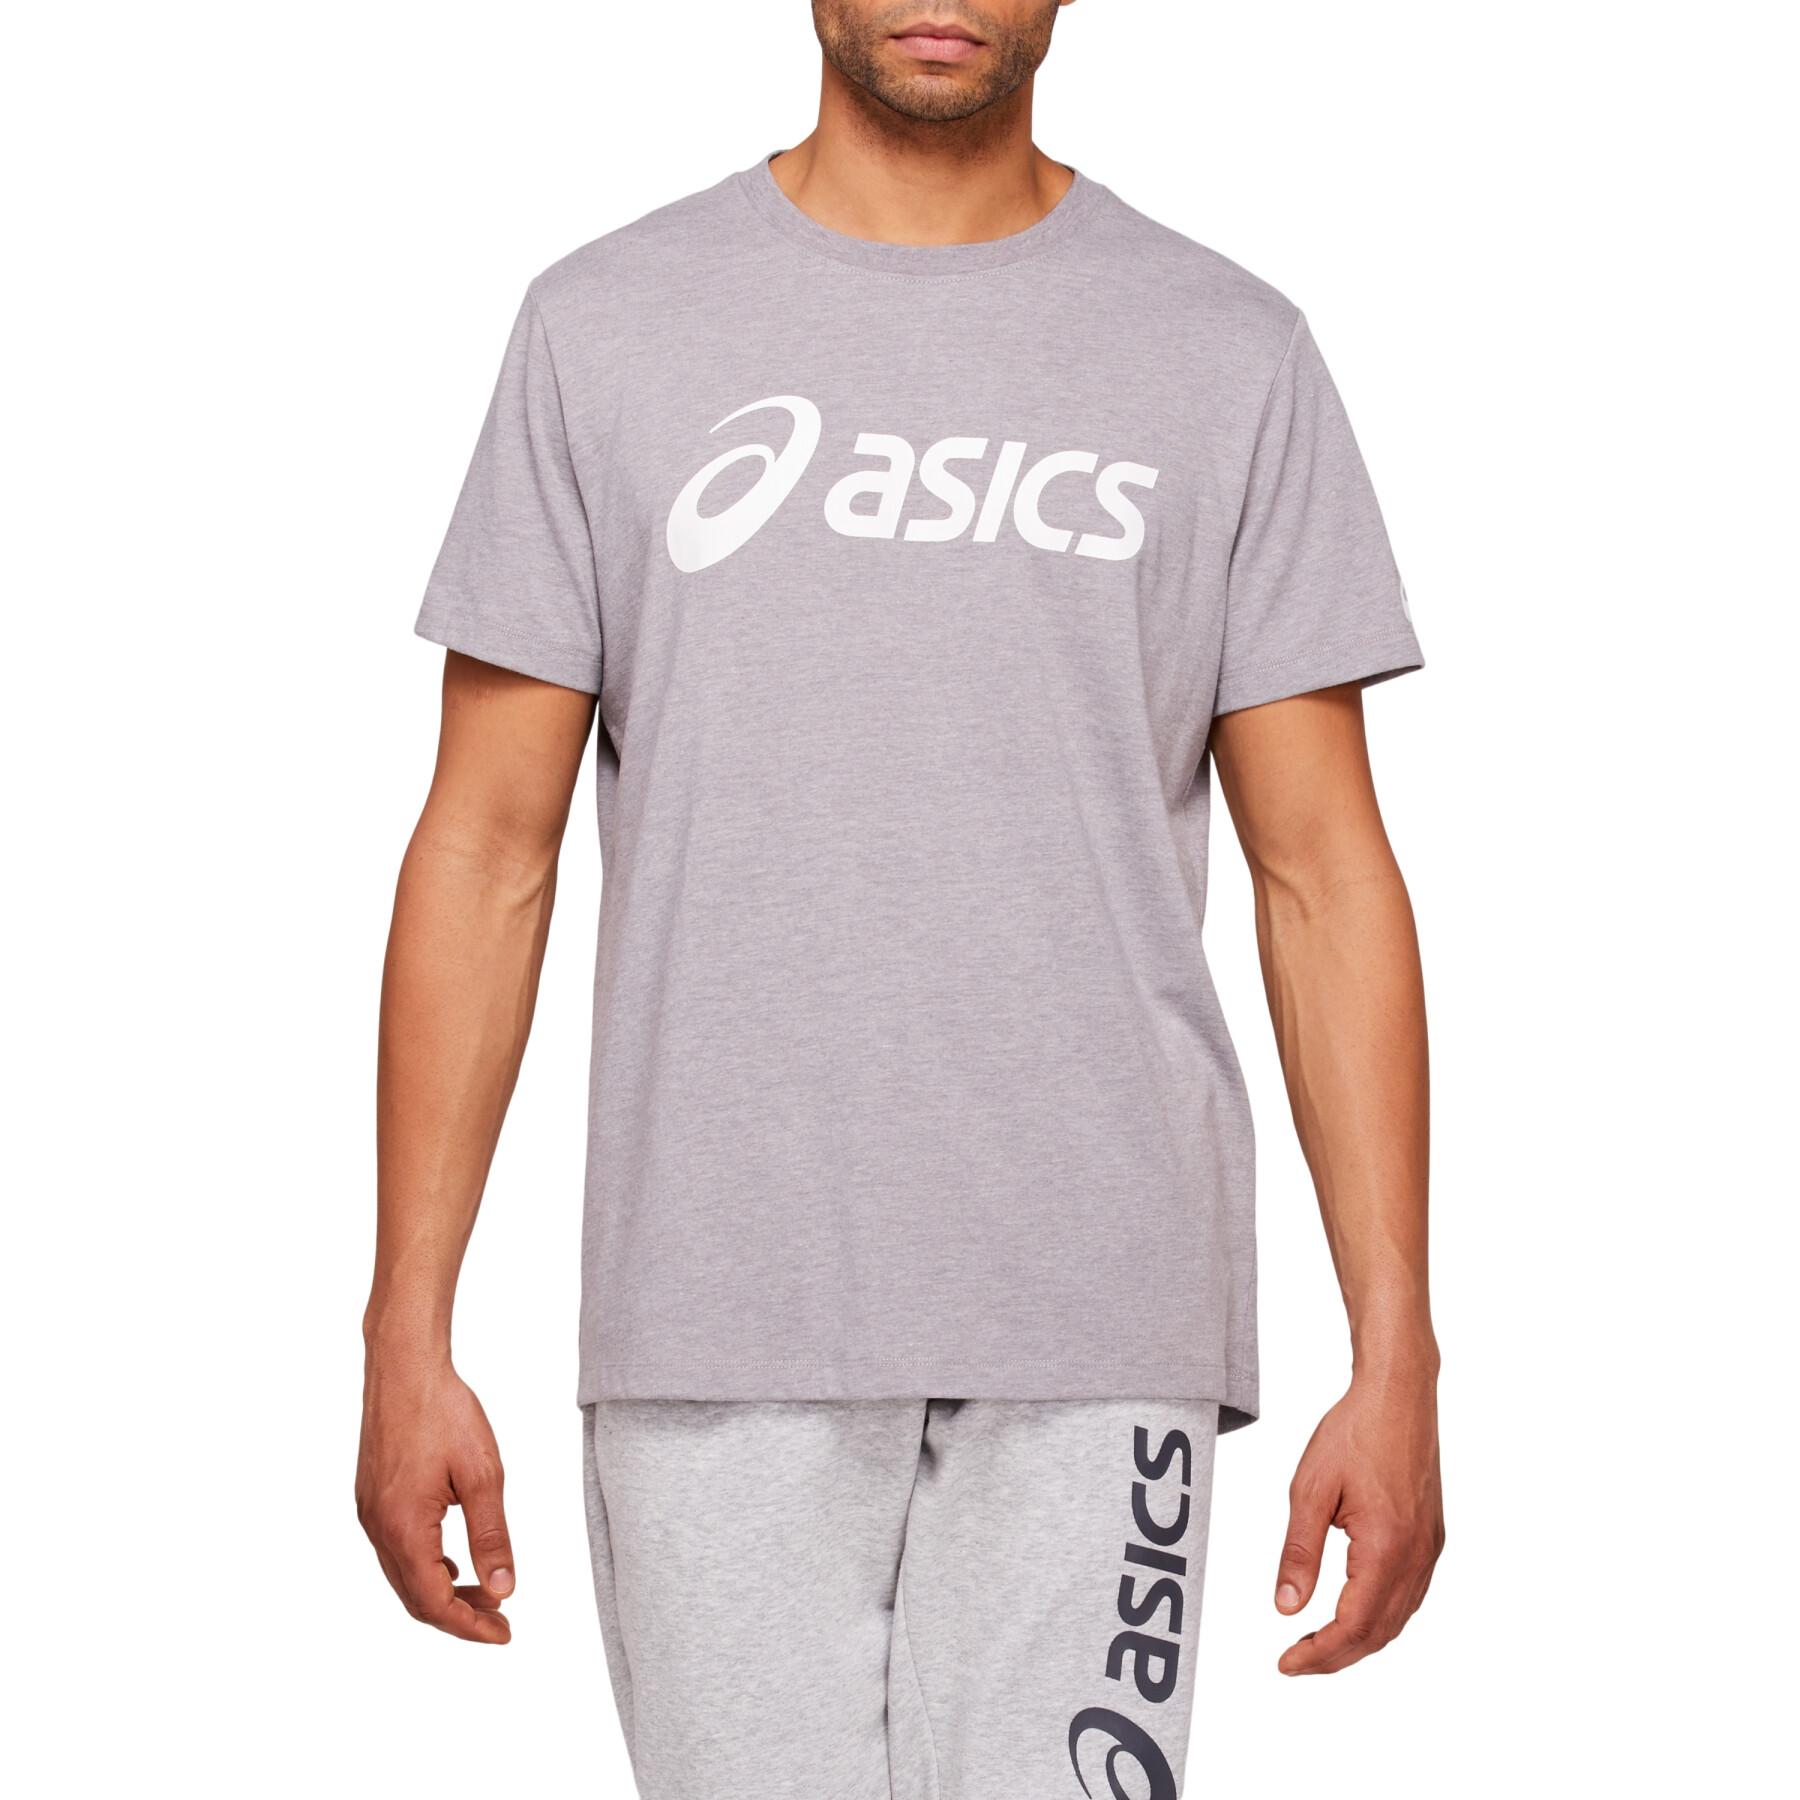 T-shirt Asics big logo